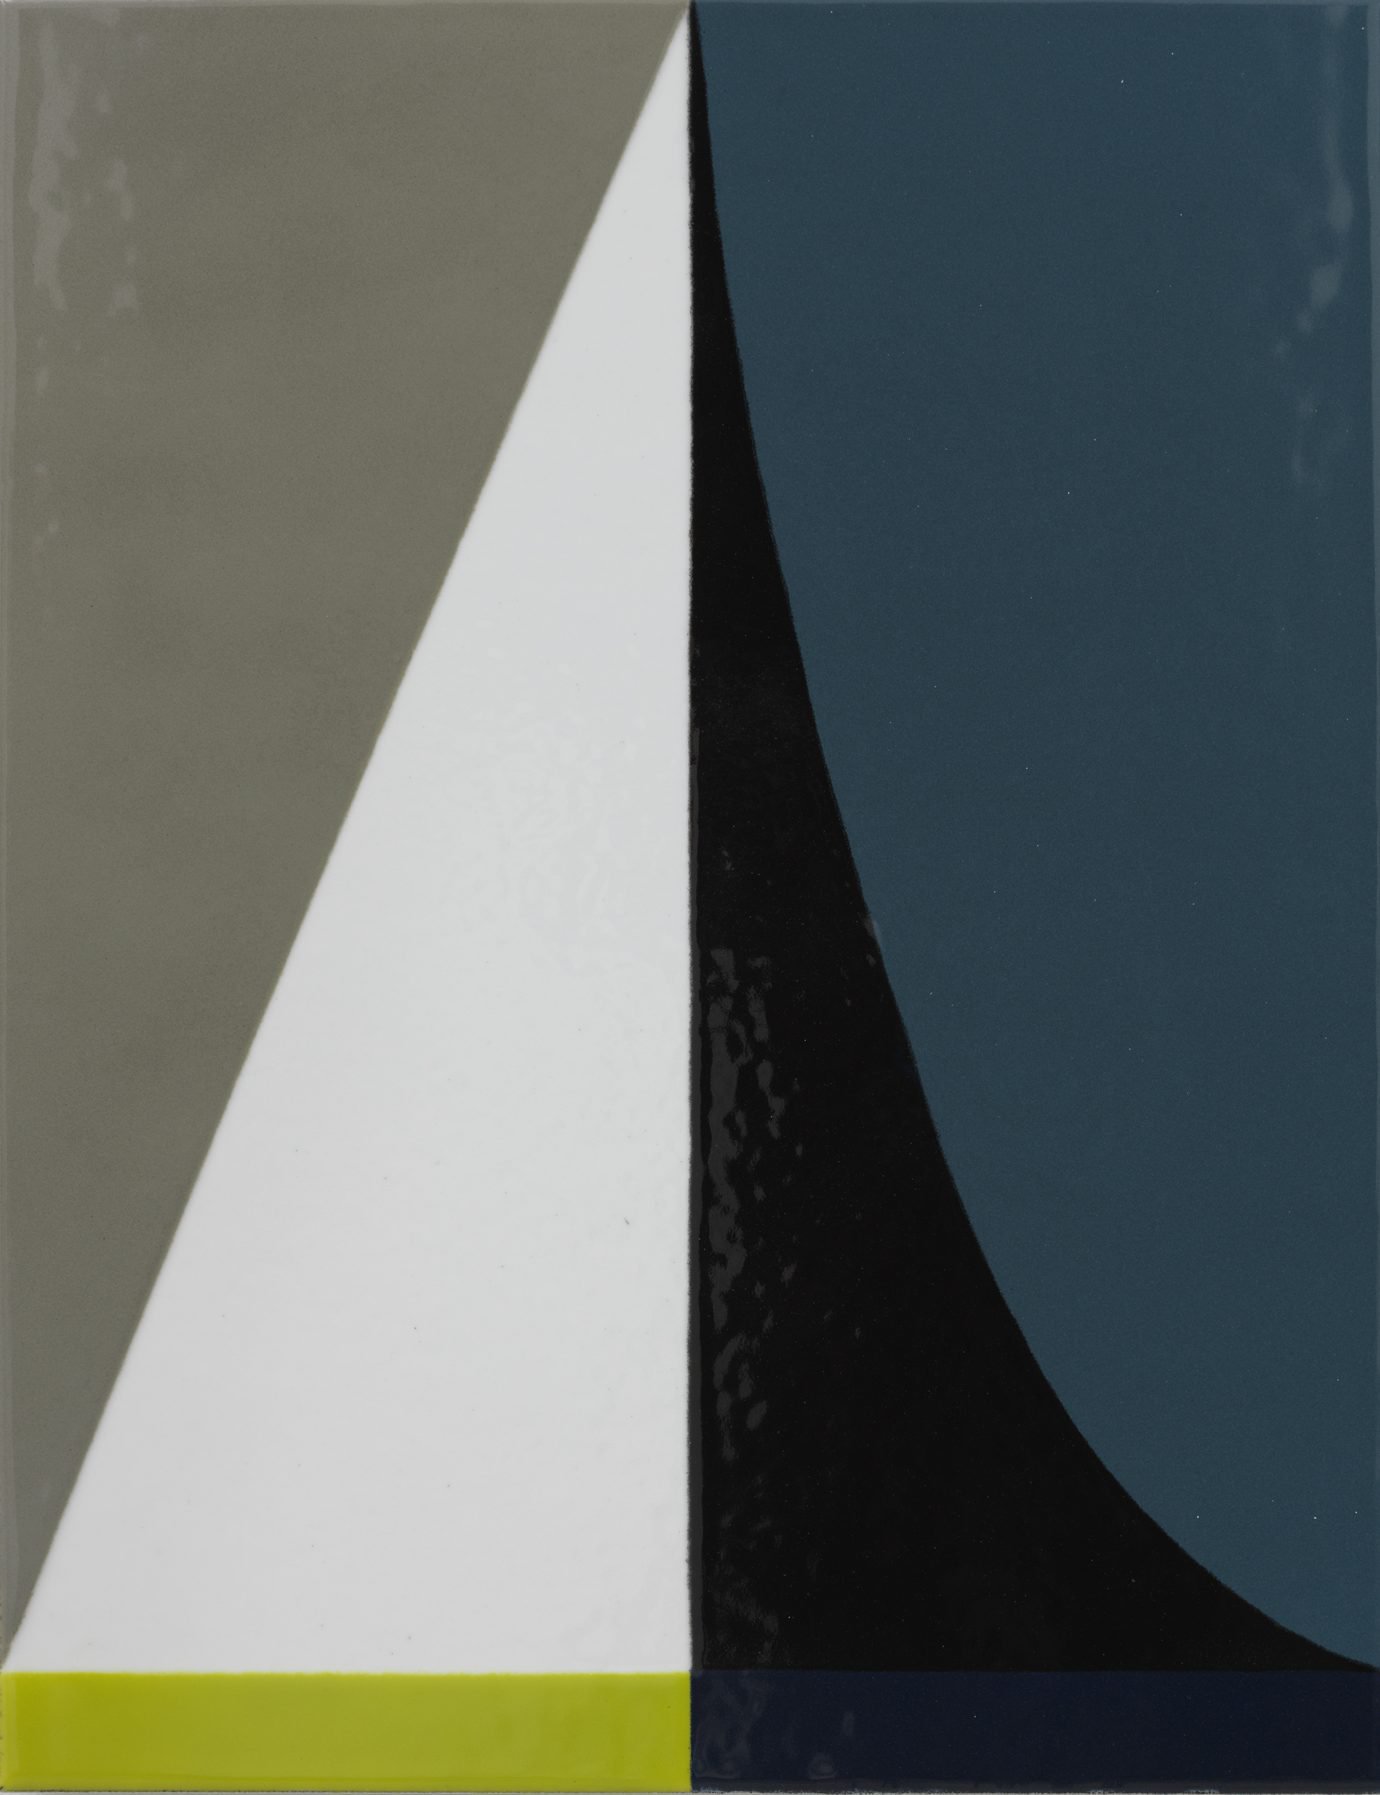 Ulrike Müller, Container, vitreous enamel on steel, 39.4 x 30.5 cm, 2019